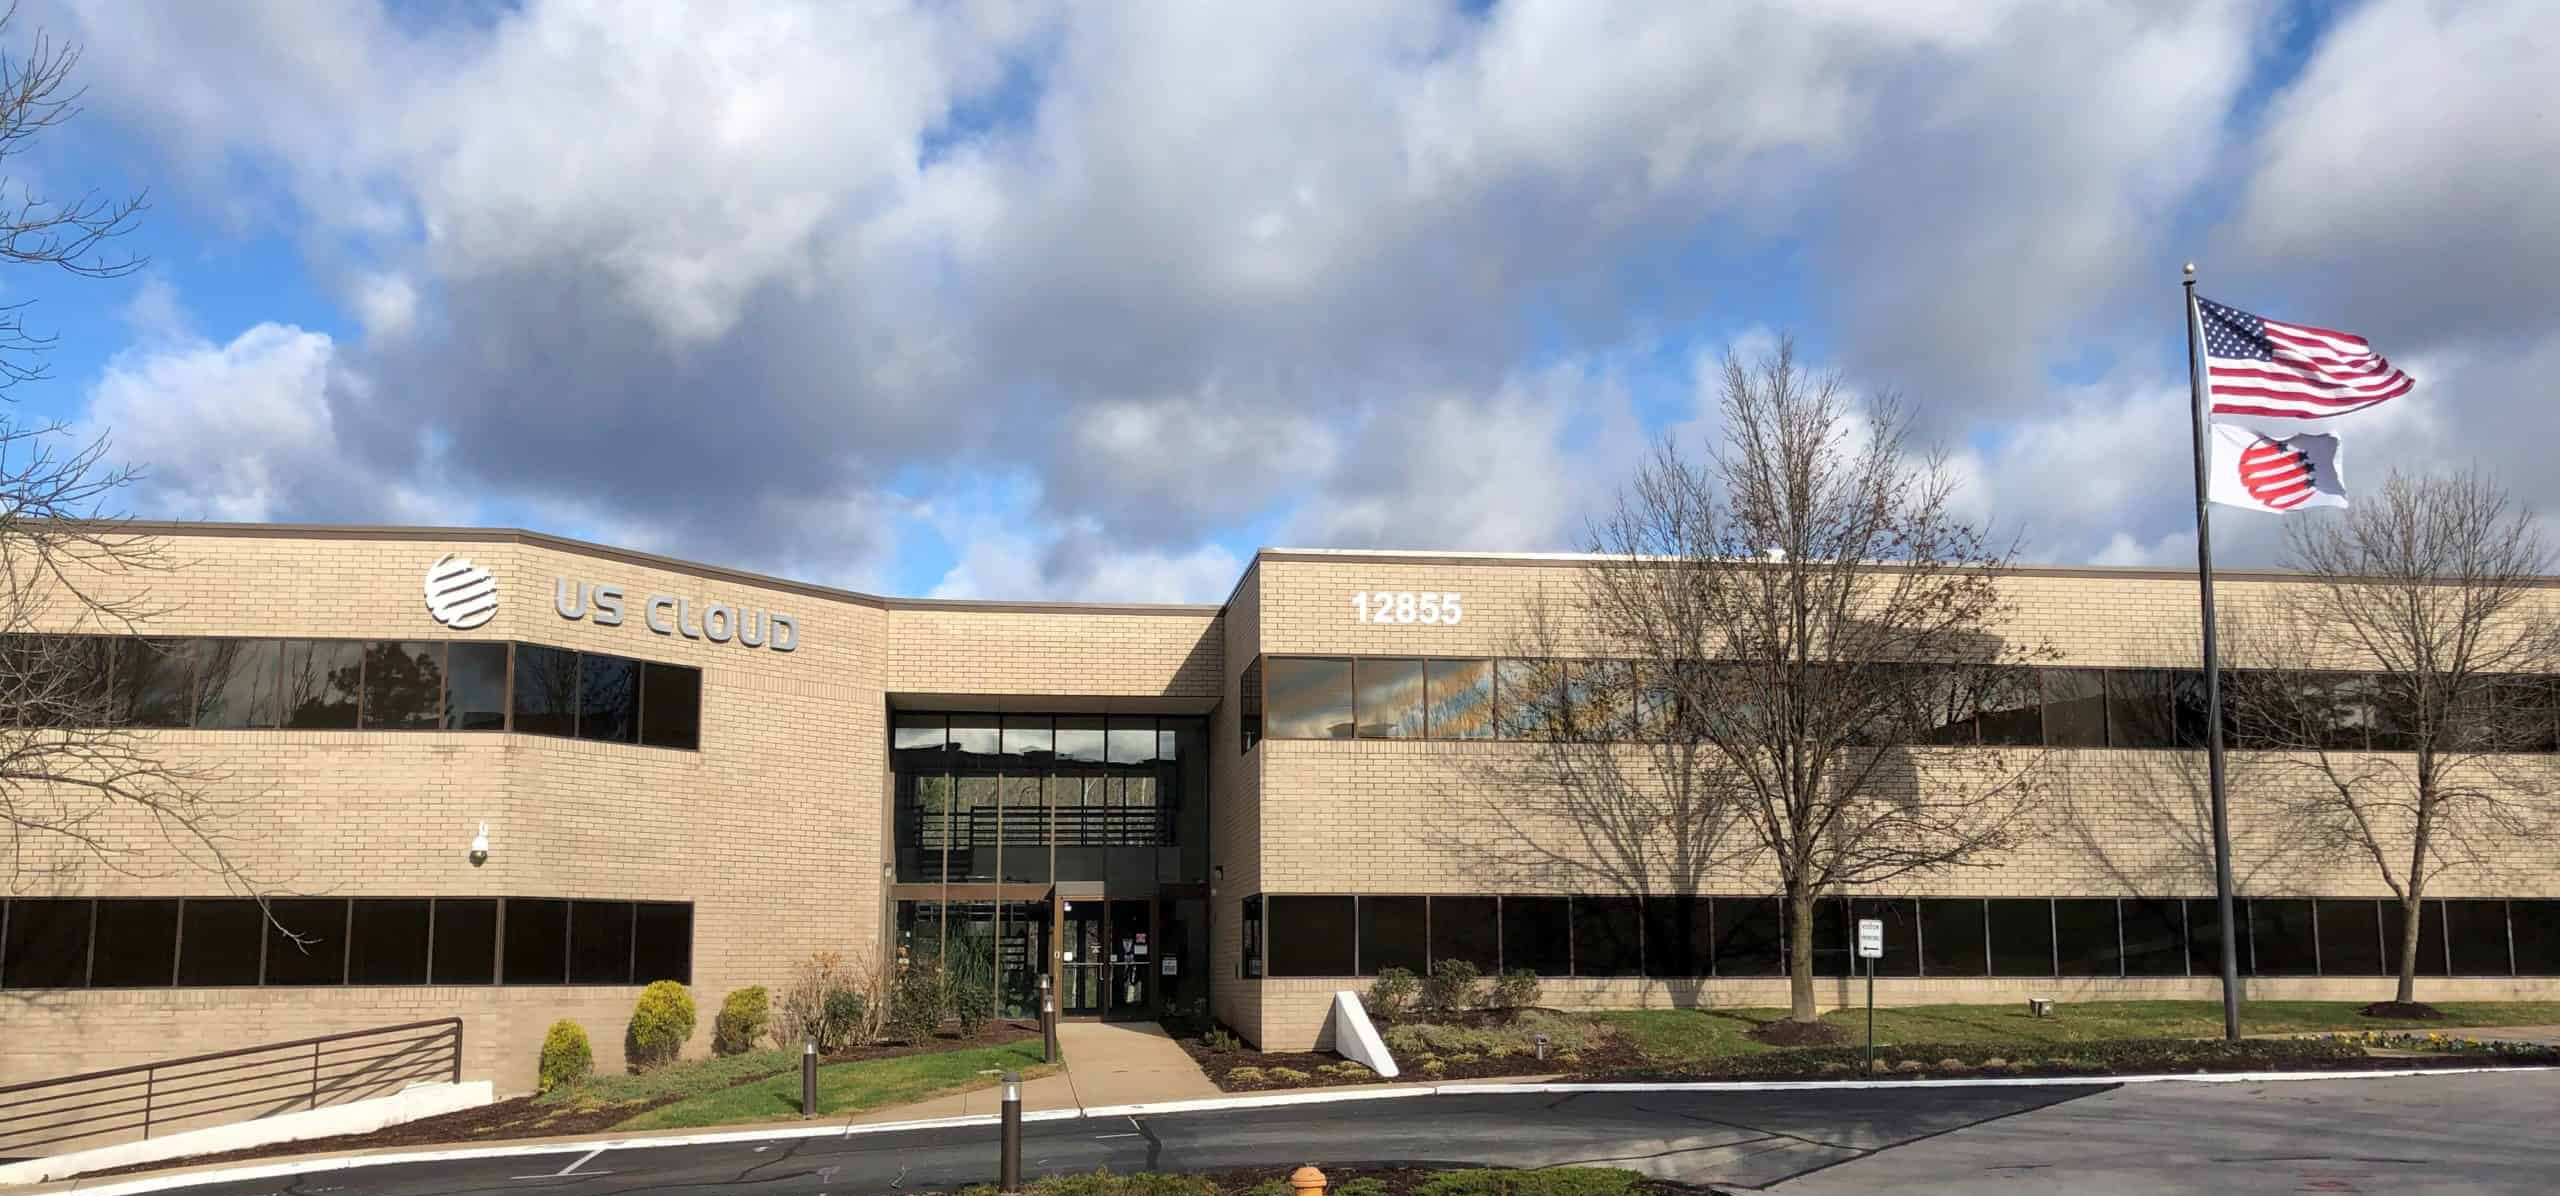 US Cloud Microsoft Support Headquarters - St. Louis, MO